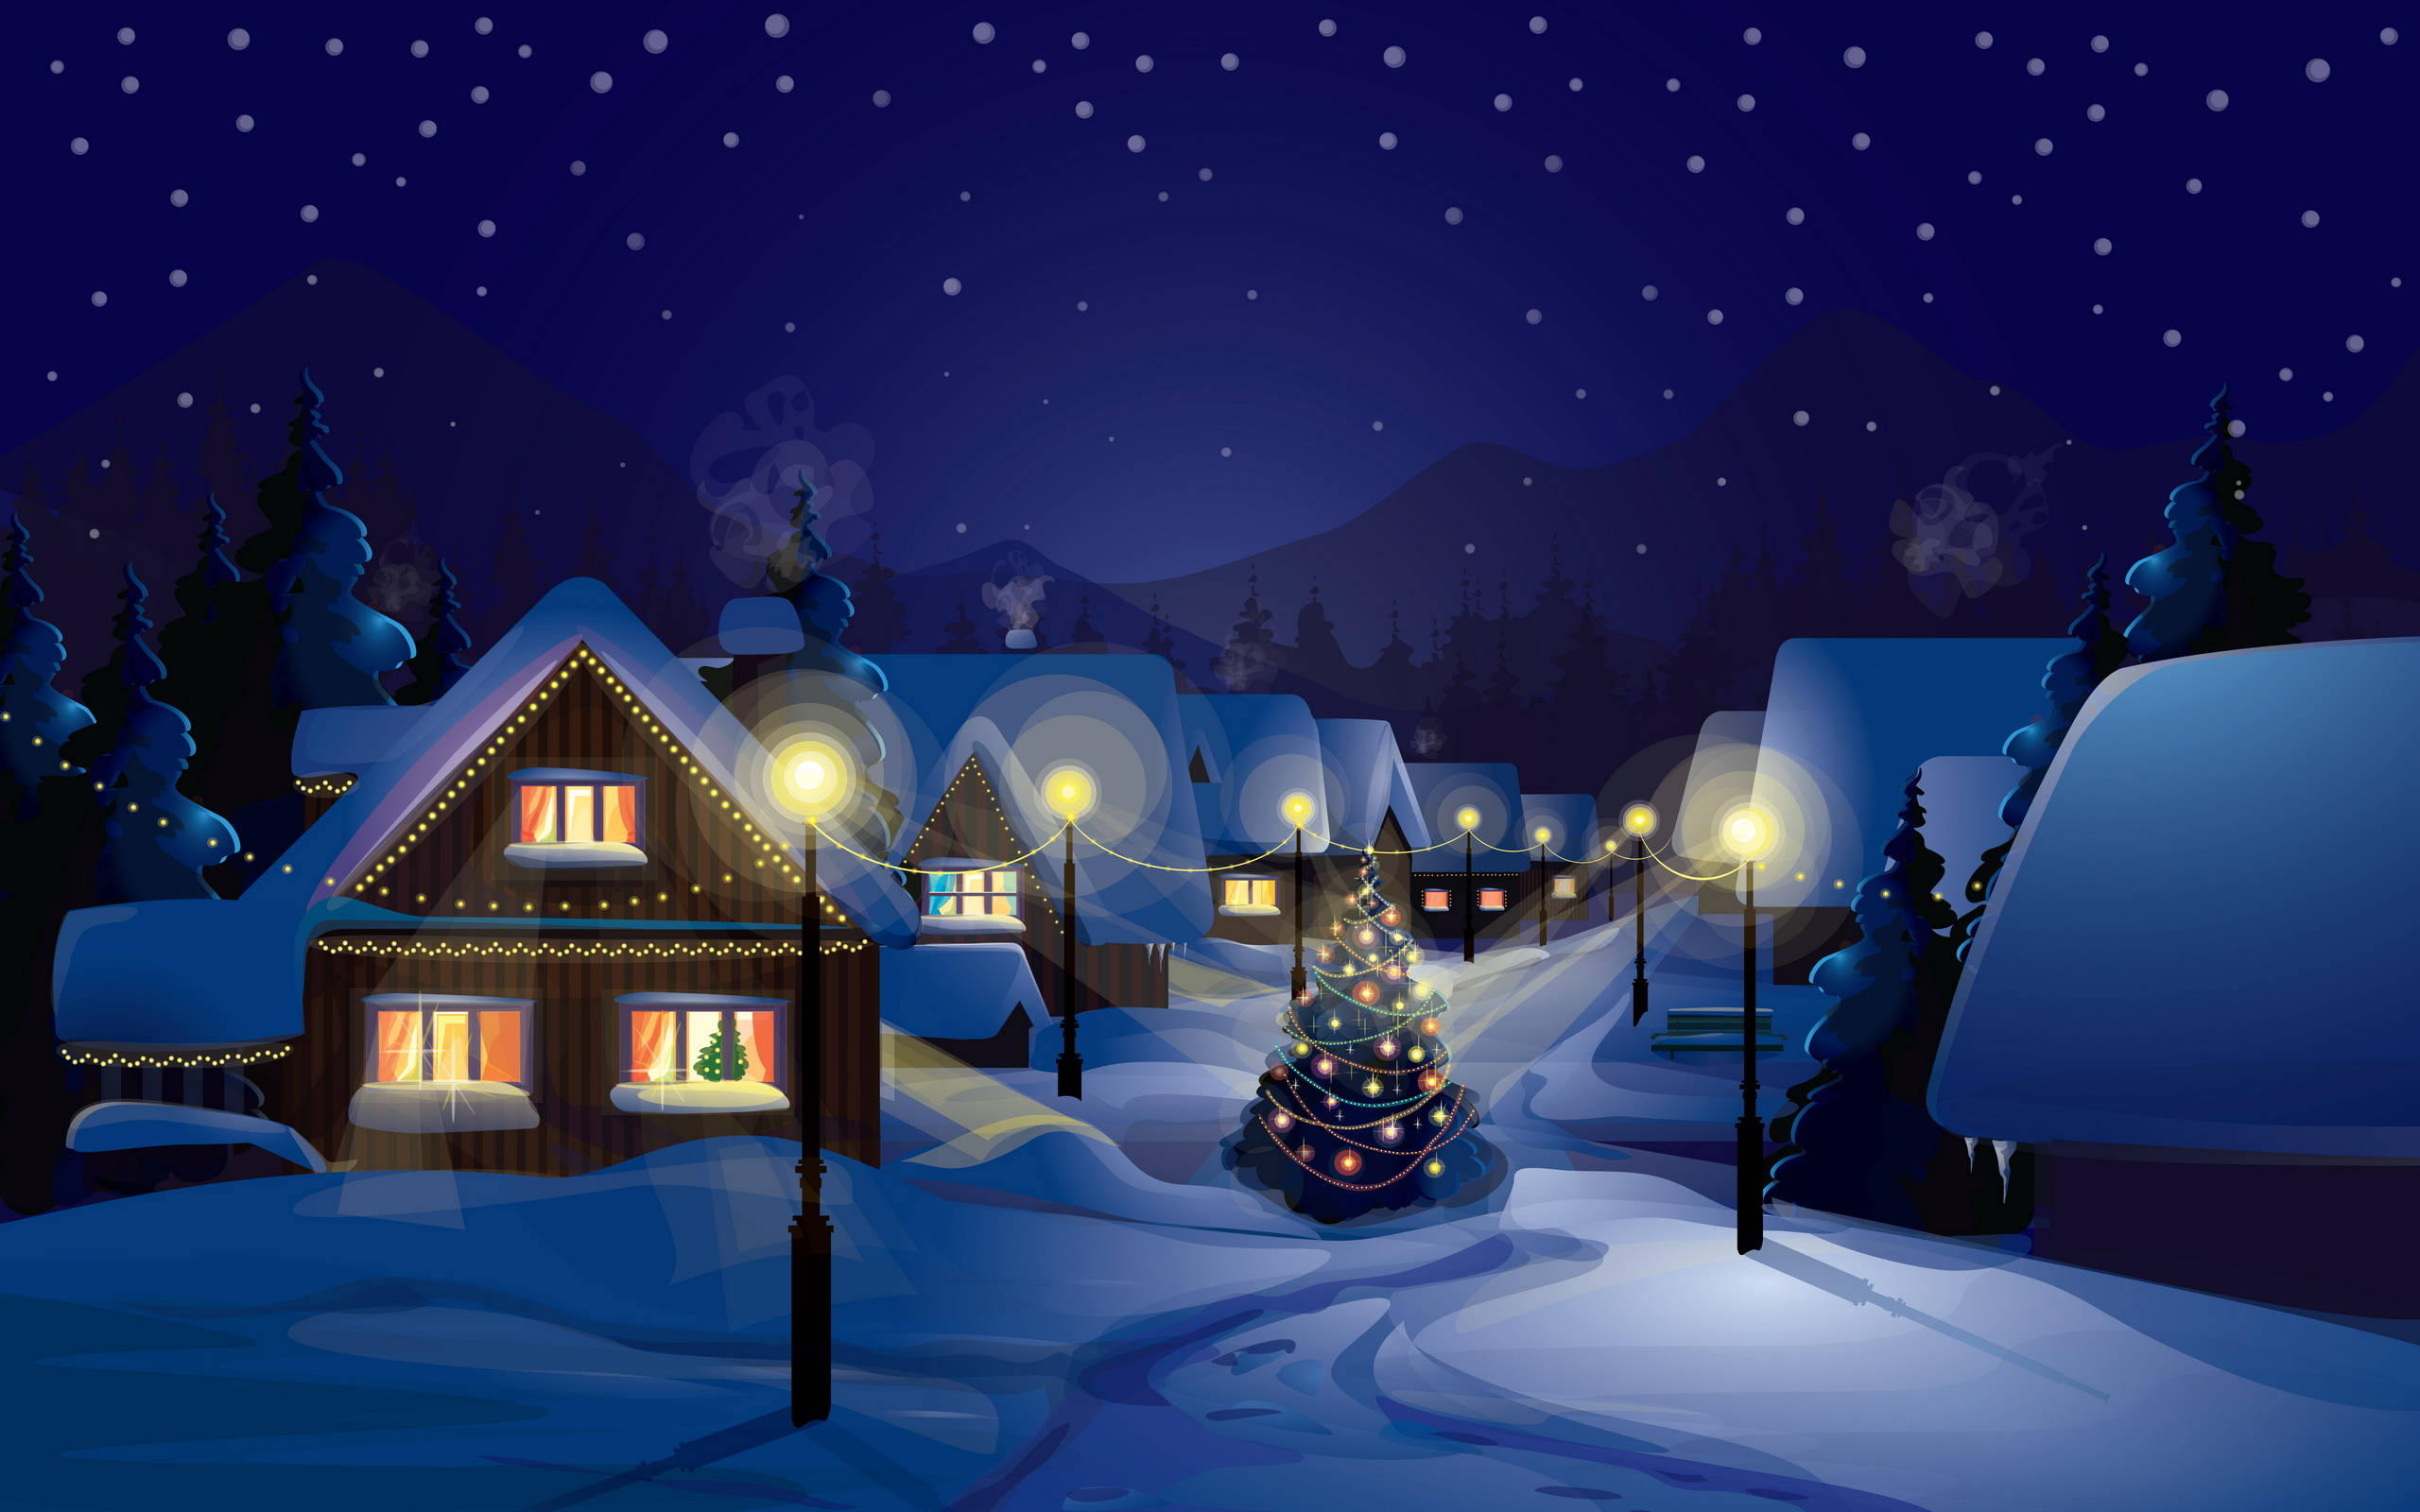 Download Snowy Village Christmas Holiday Desktop Wallpaper